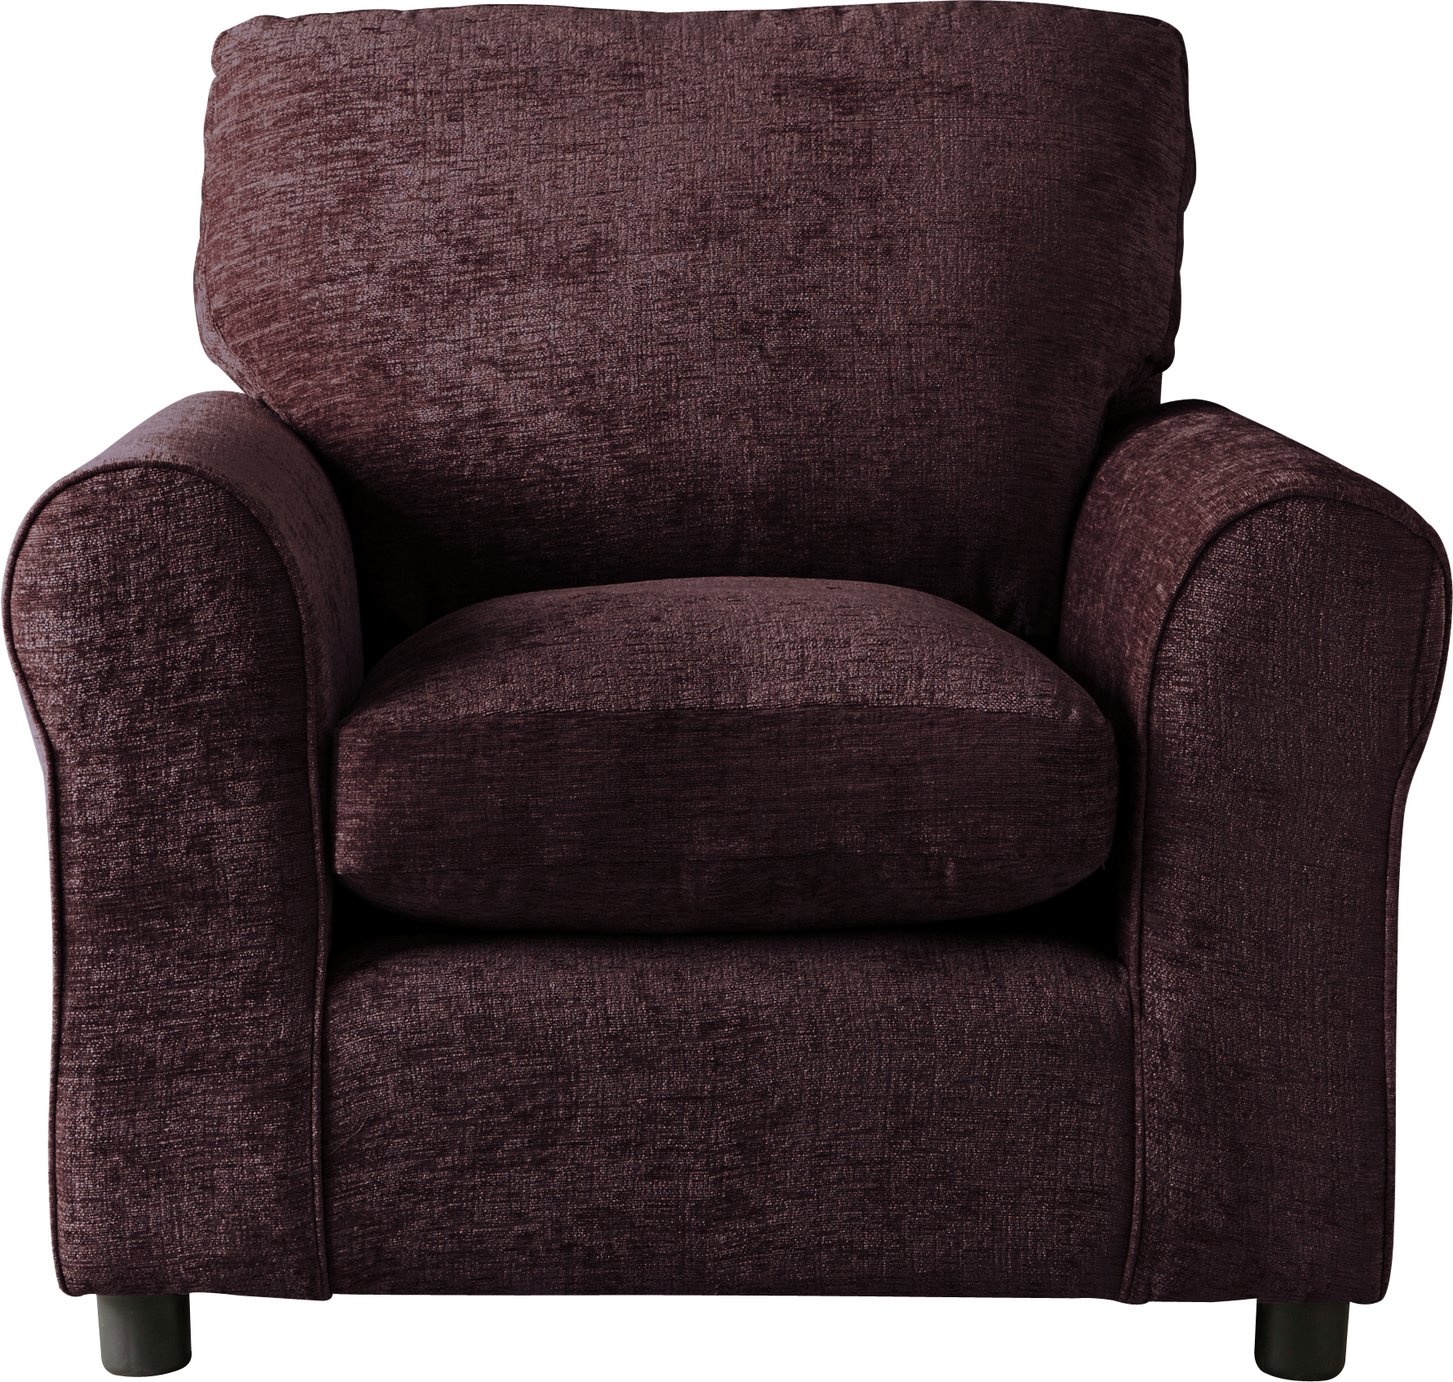 Argos Home Tessa Fabric Chair - Chocolate